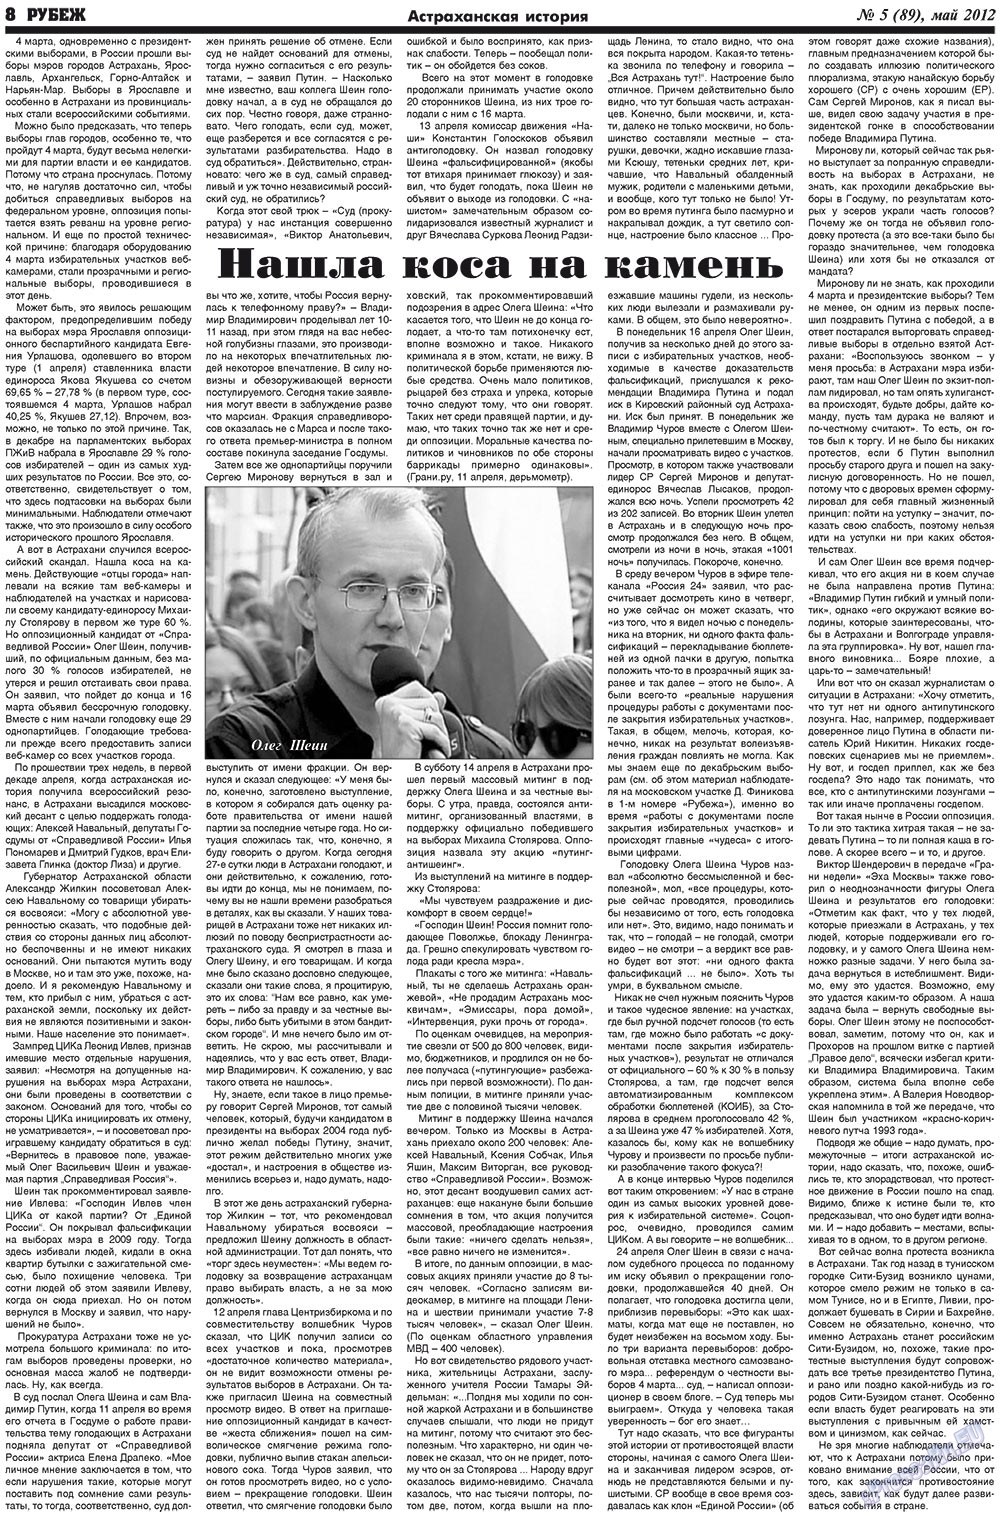 Рубеж, газета. 2012 №5 стр.8